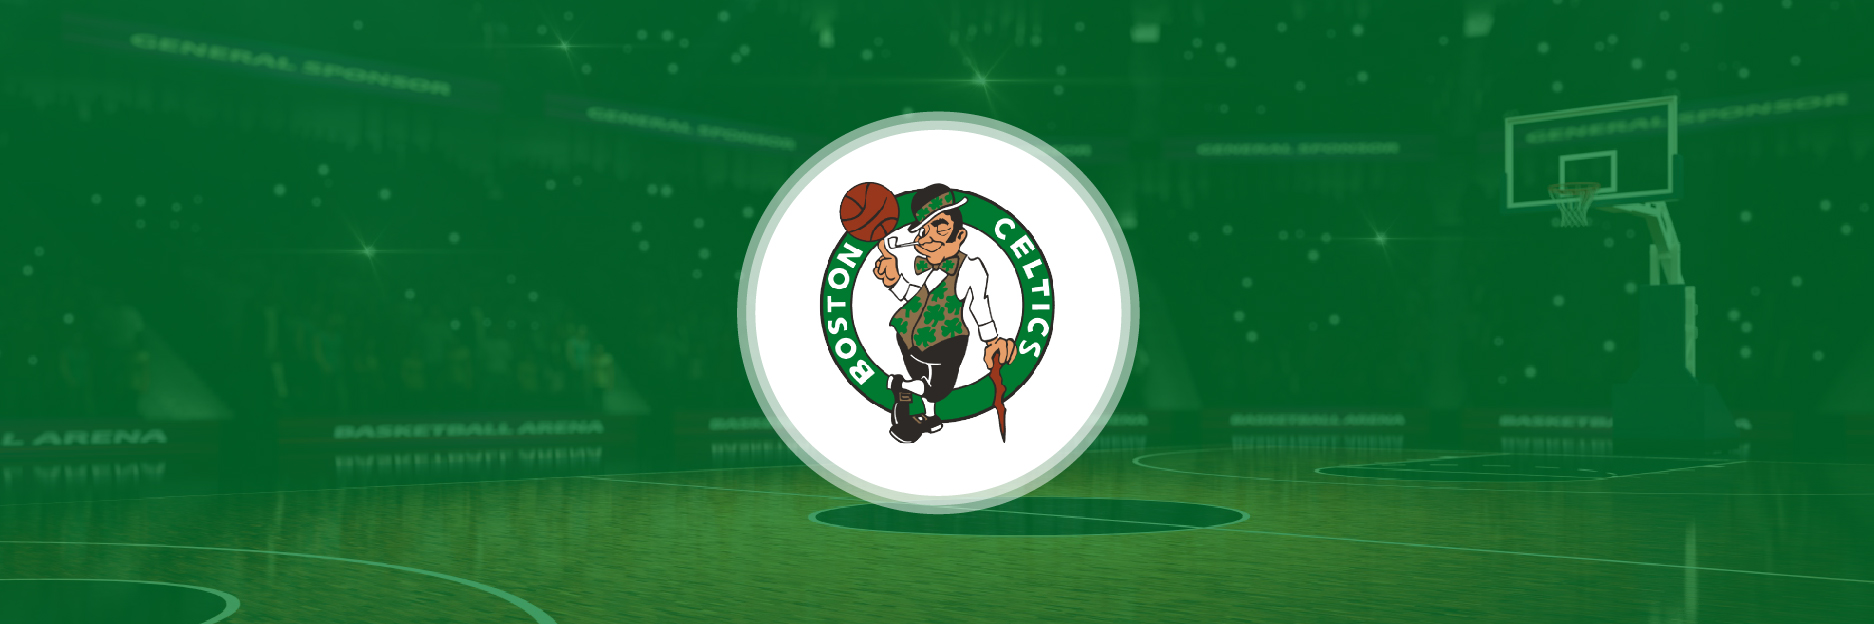 NBA Boston Celtics 2020 Season Analysis